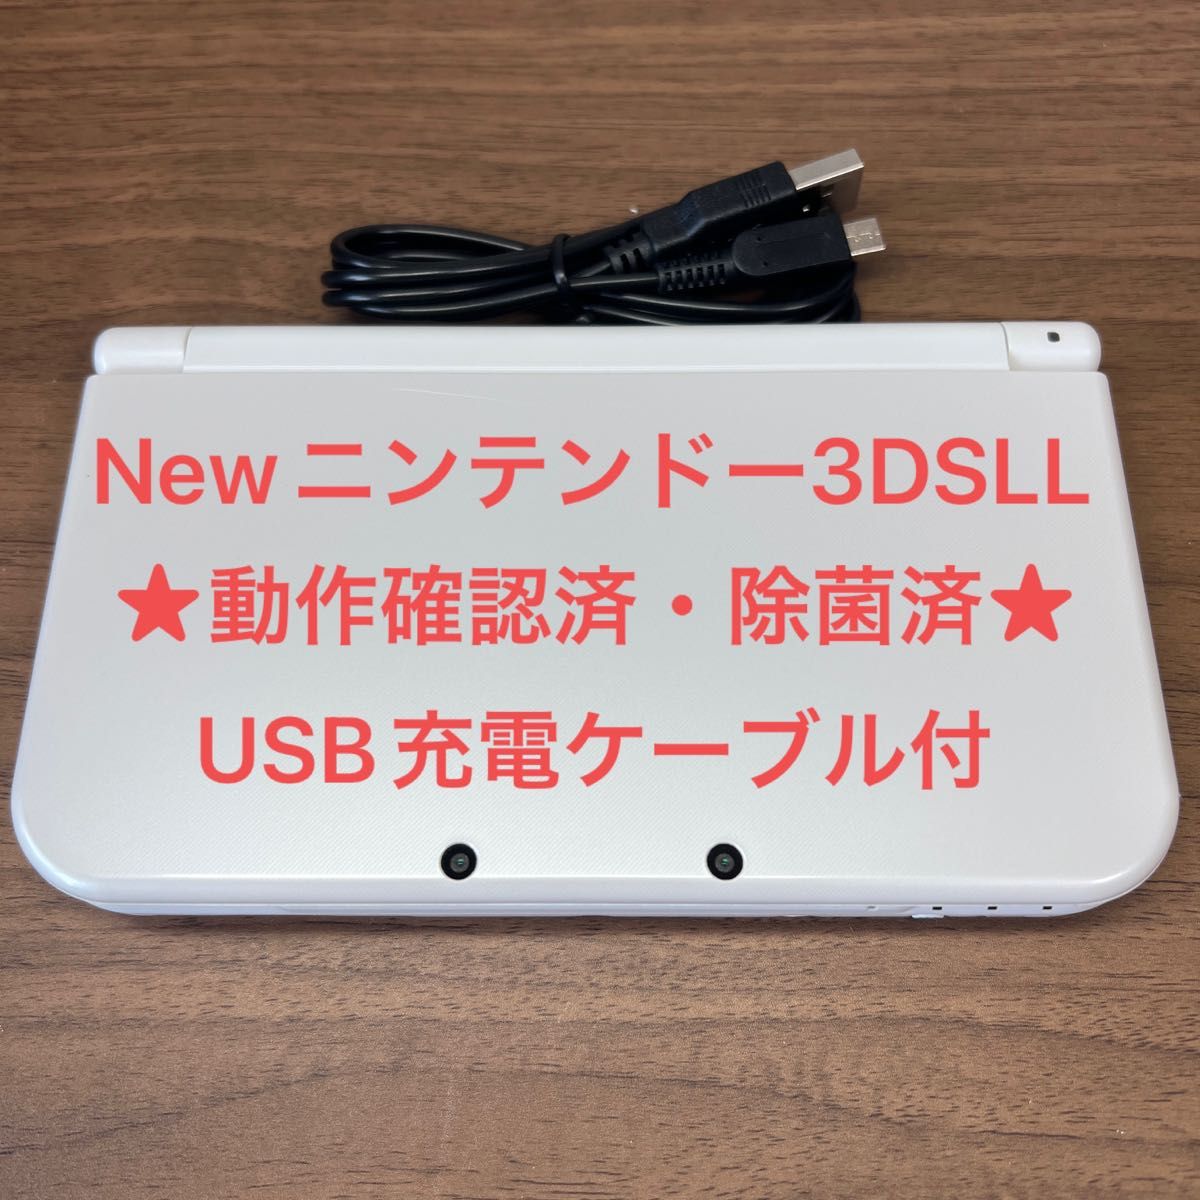 New ニンテンドー 3DSLL パールホワイト USB充電ケーブル付 